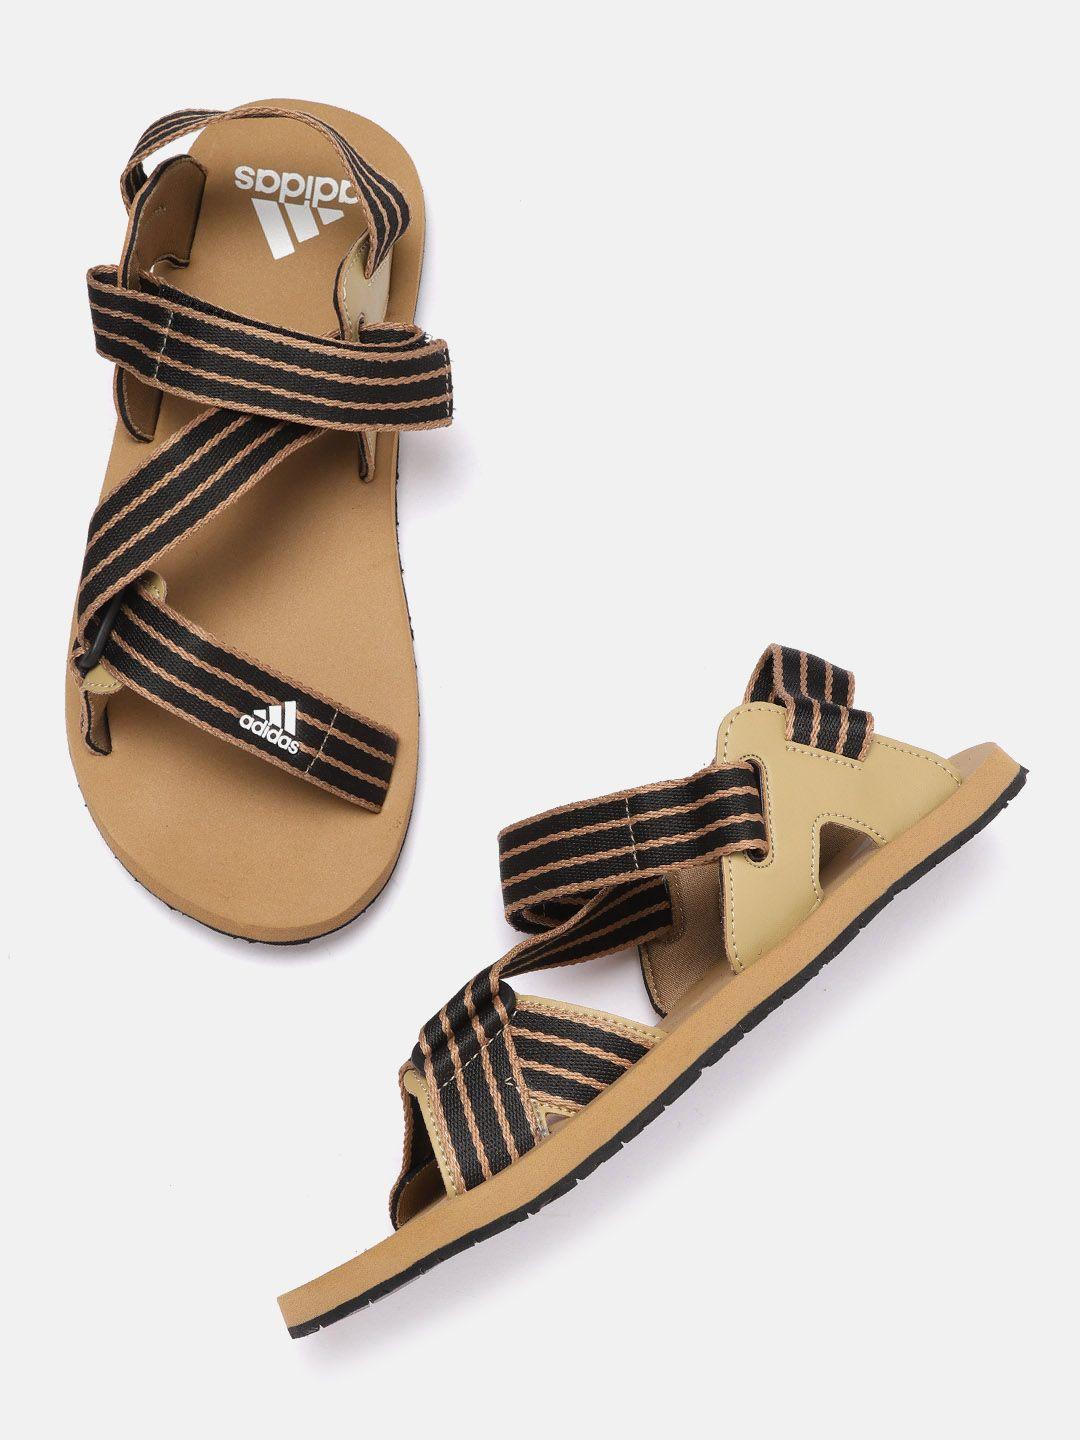 adidas-men-black-&-brown-striped-sports-sandals